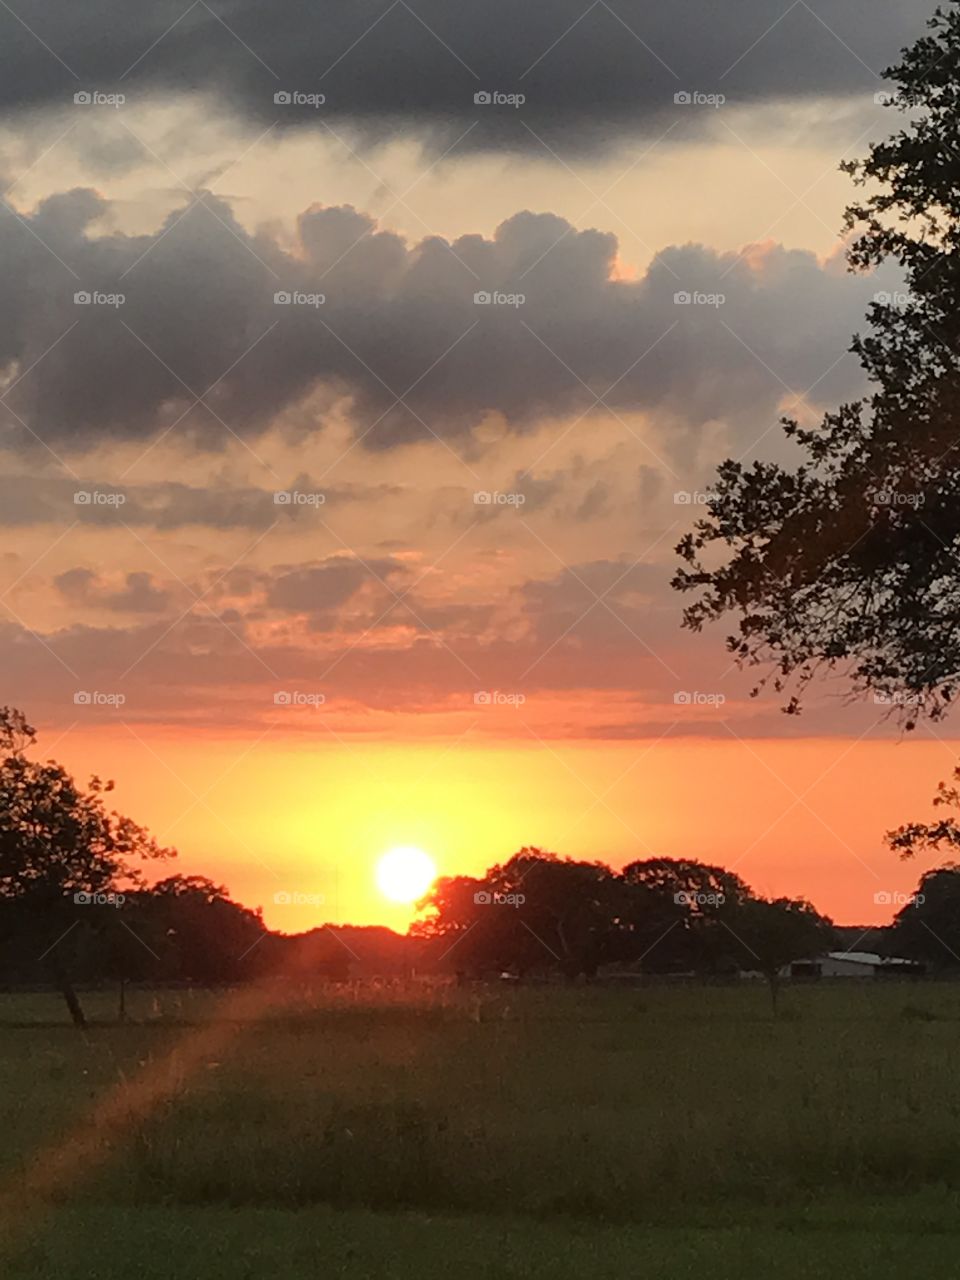 Texas sunrise